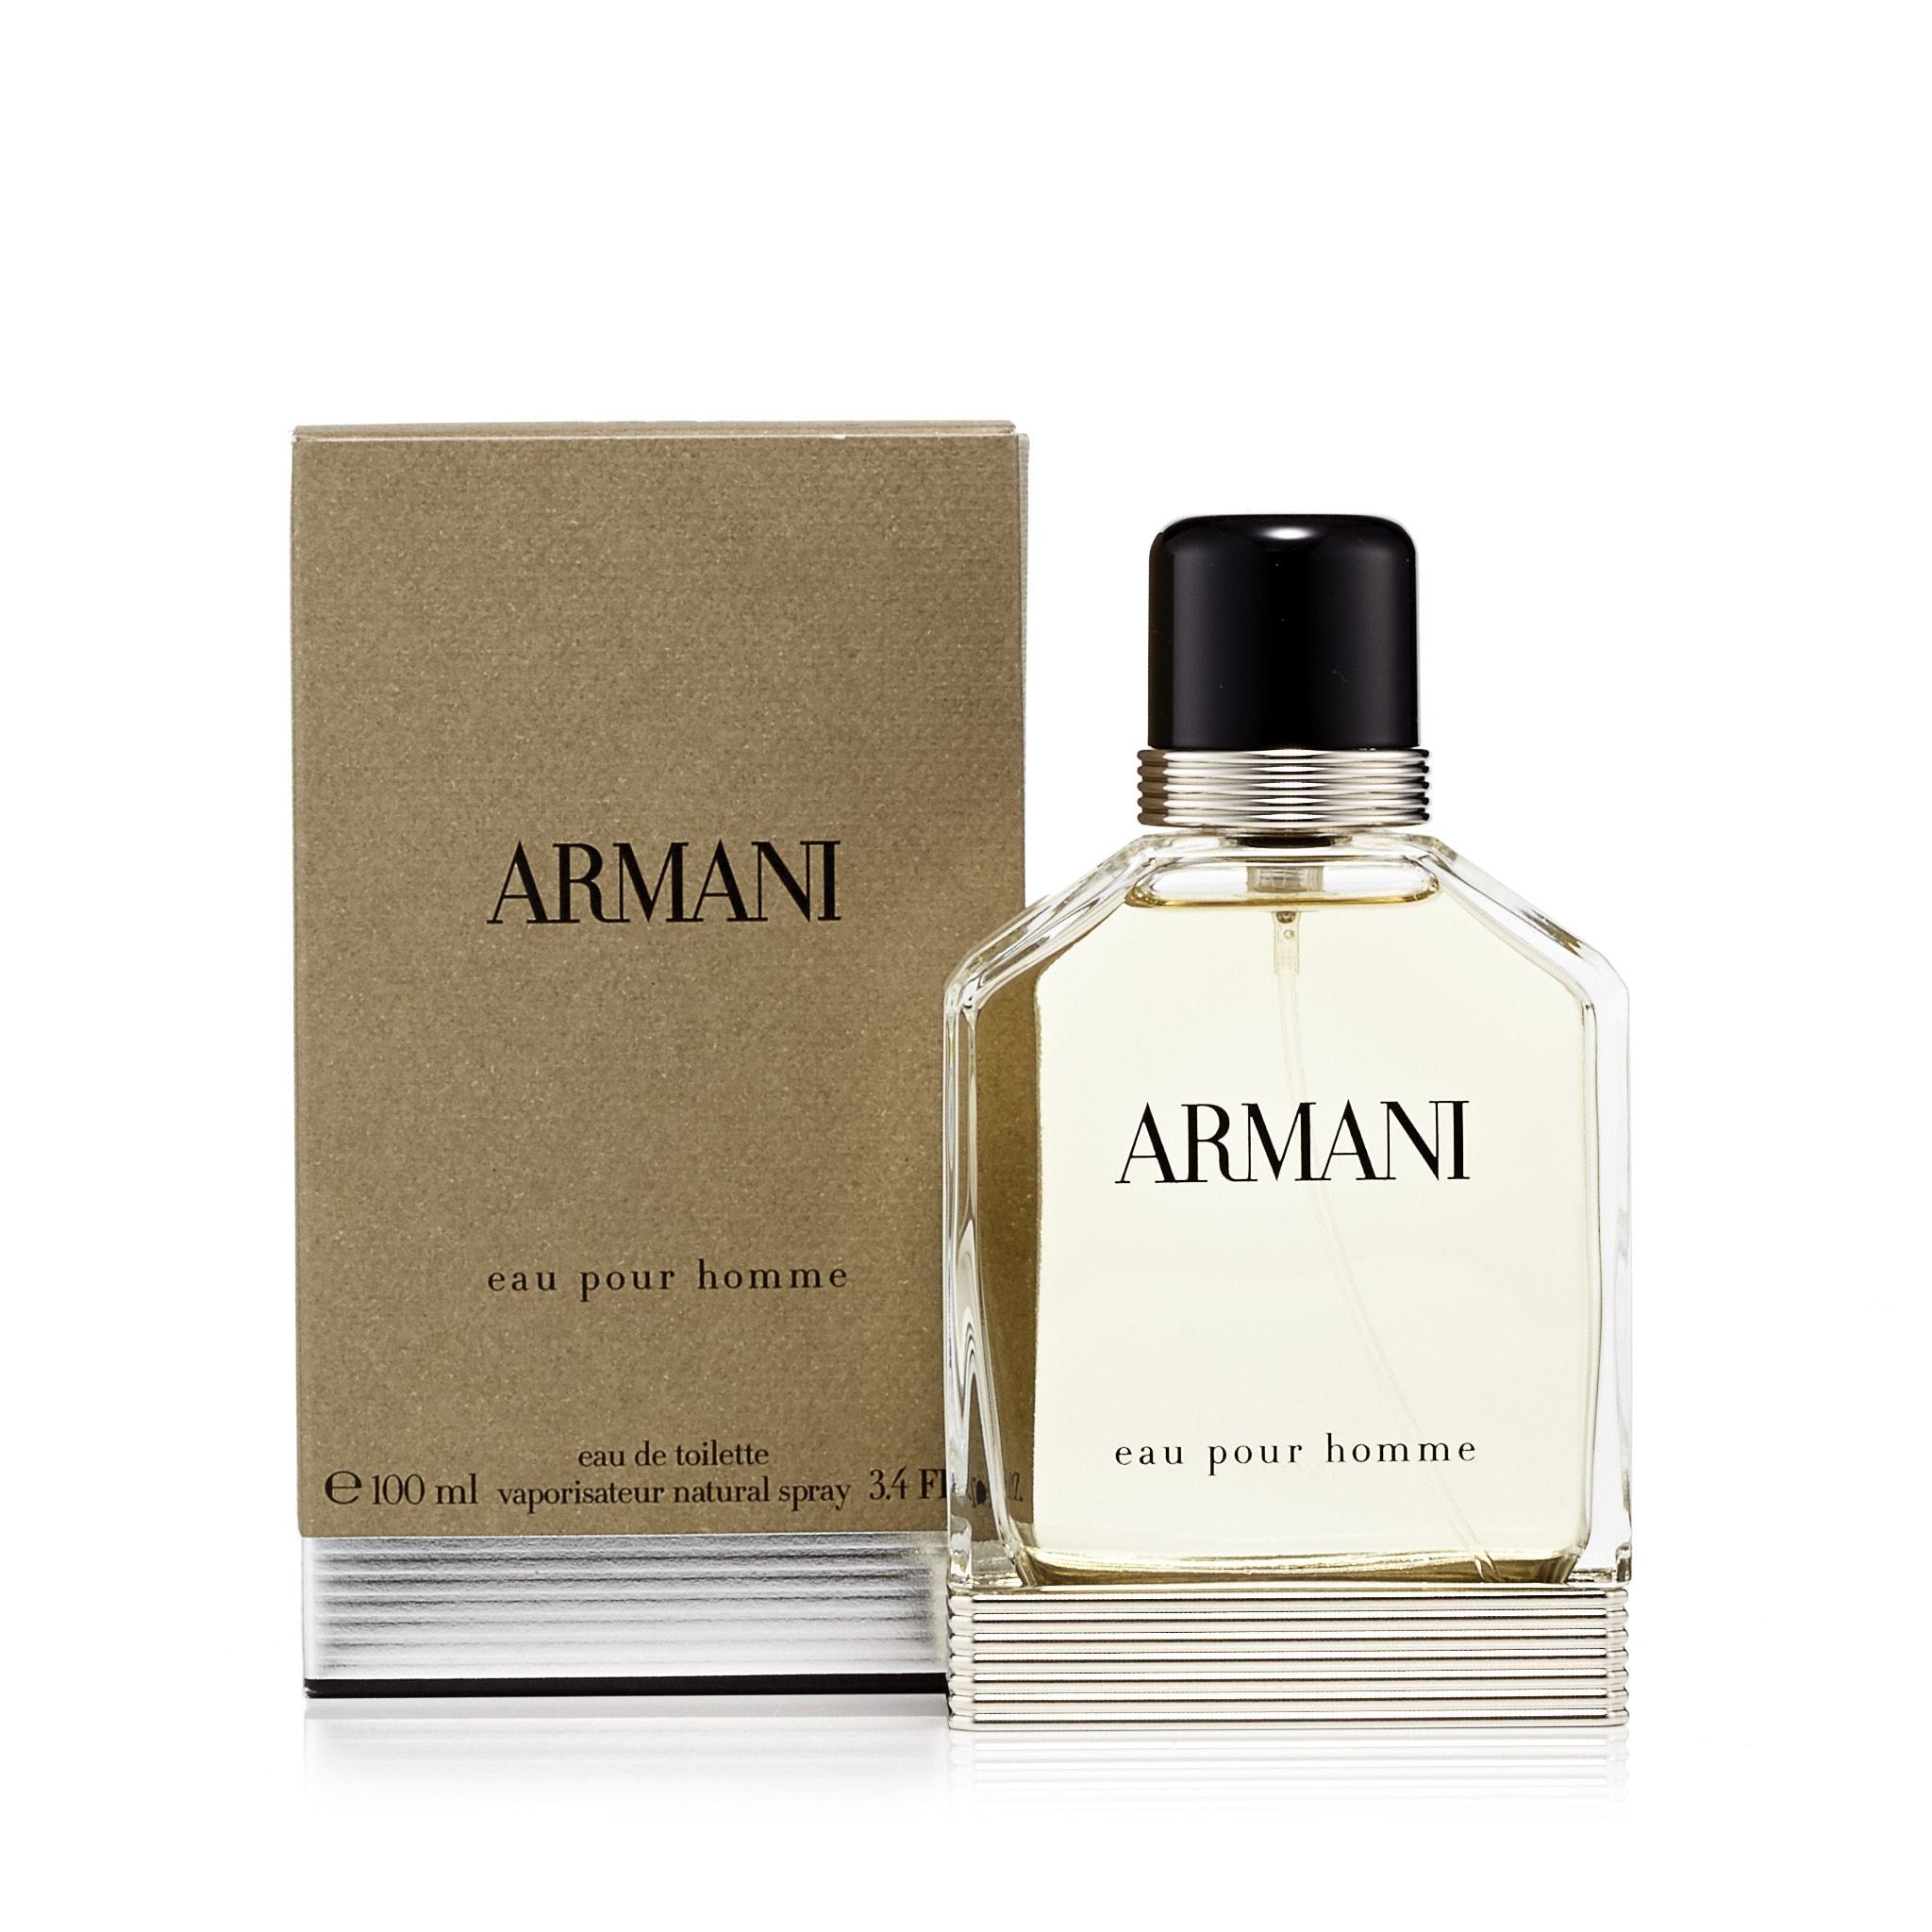 Giorgio armani pour homme. Giorgio Armani Eau de Parfum мужские. Туалетная вода Armani Eau pour homme. Армани на английском. Джорждио Армани Еау Даромес.